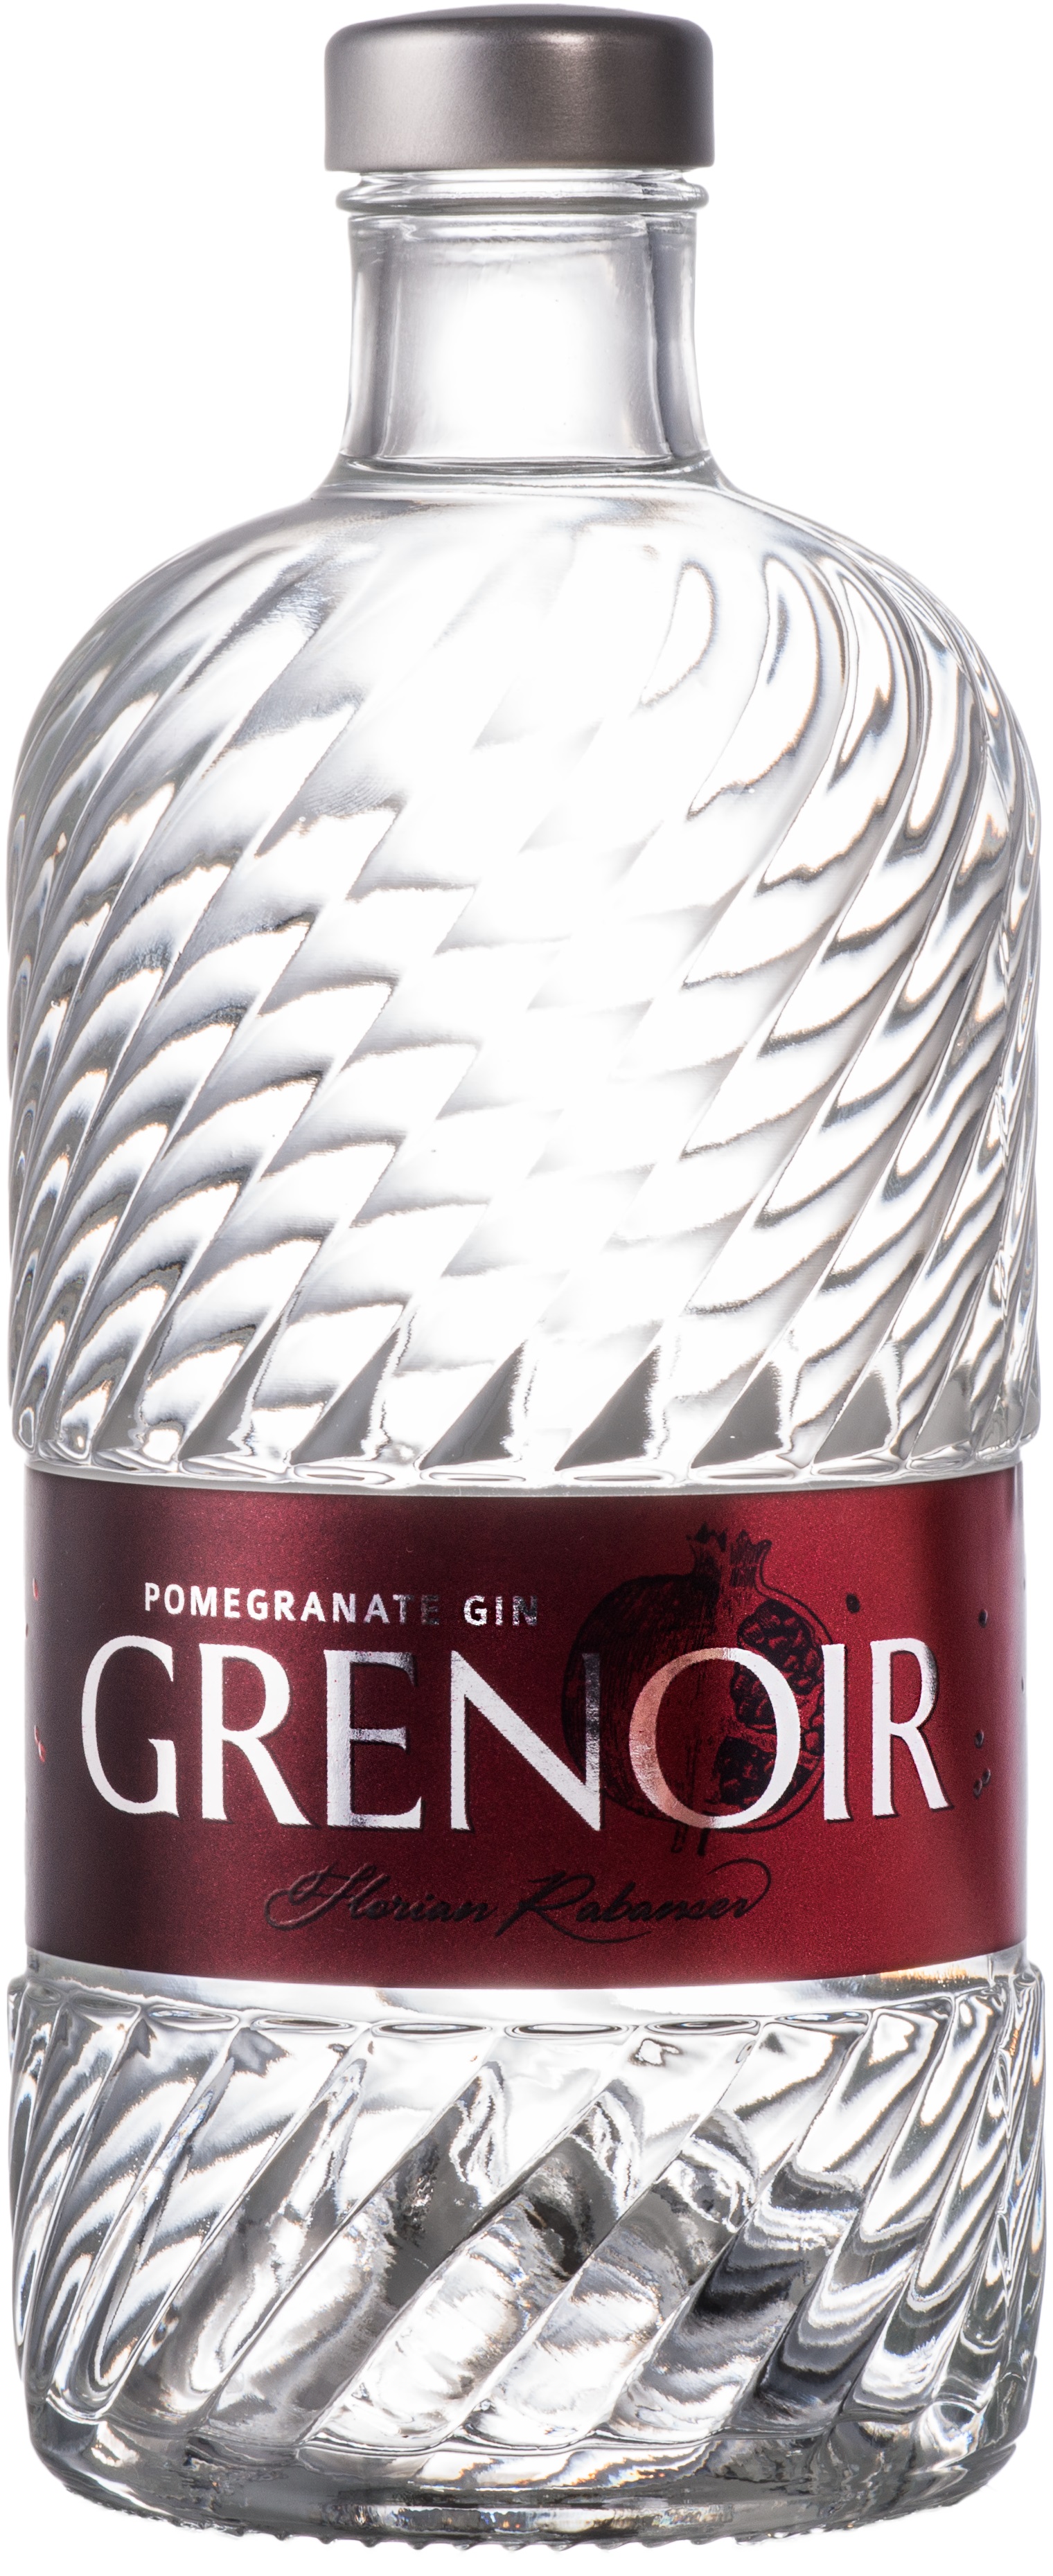 Gin Grenoir